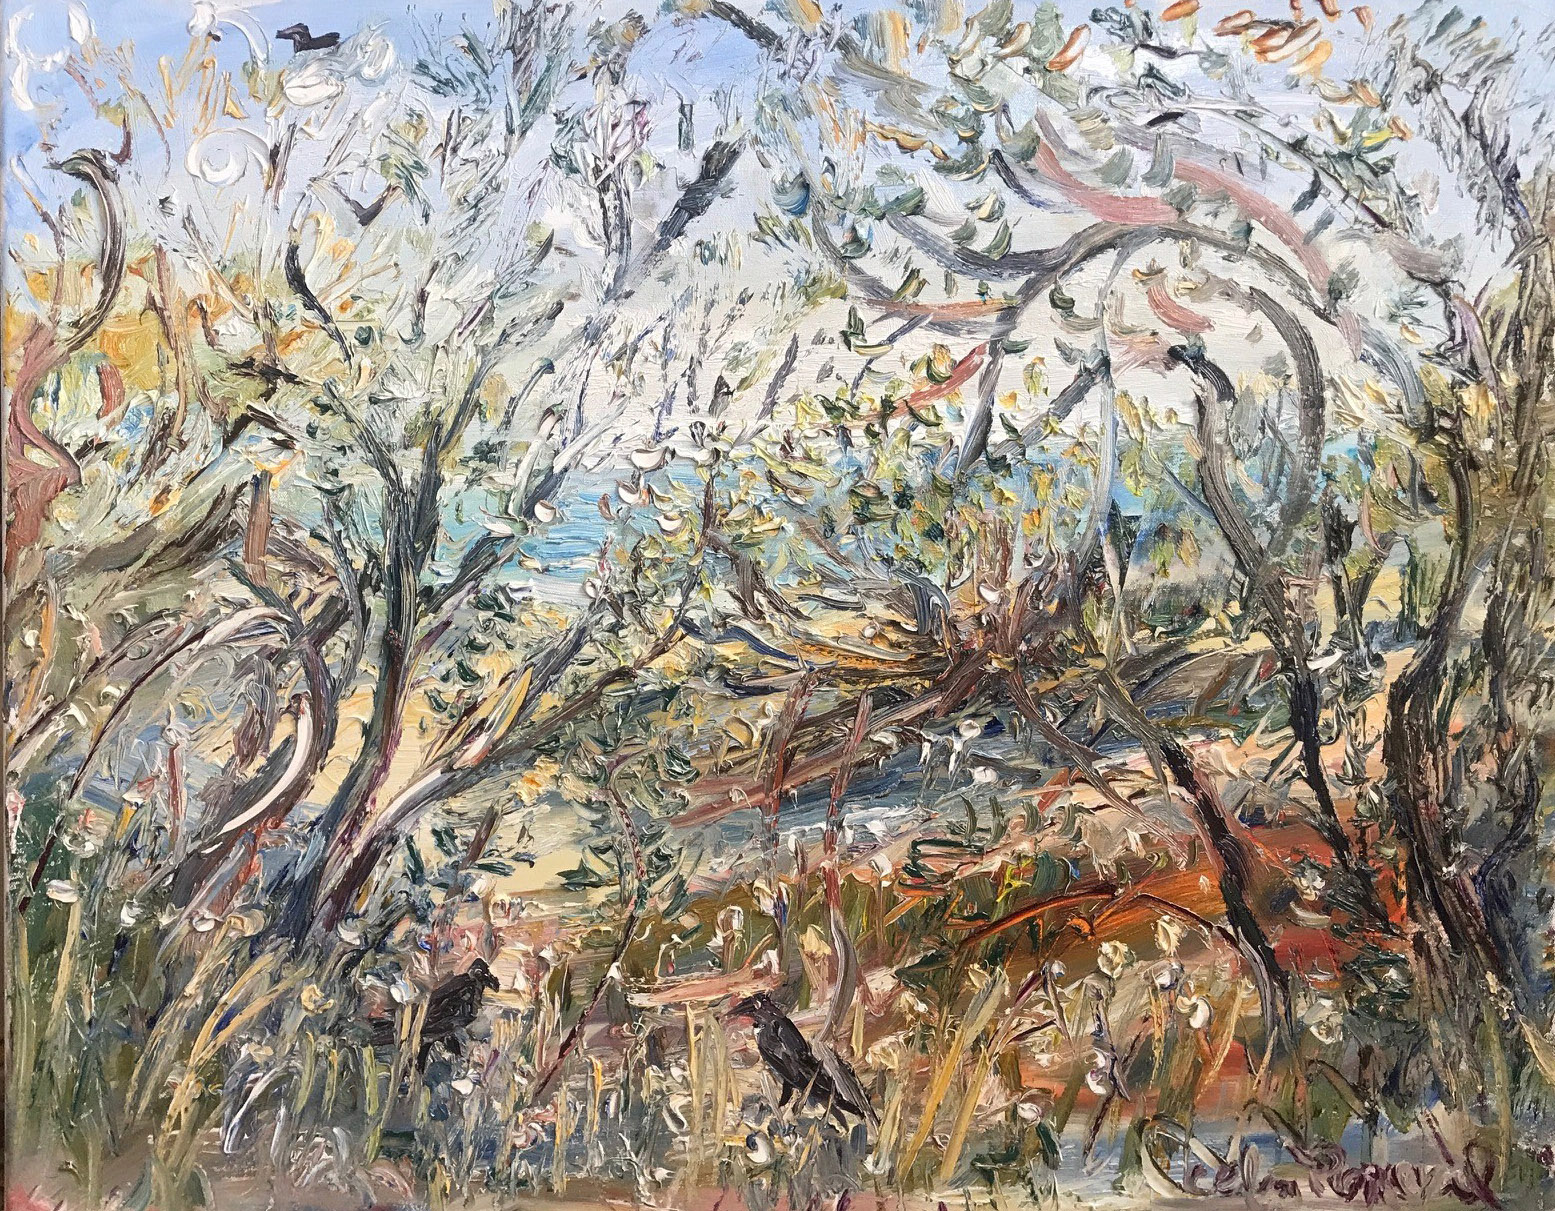 Celia Perceval 'Ravens in the Tea Trees Merrick's Beach' oil on canvas 61 x 76cm $10,000